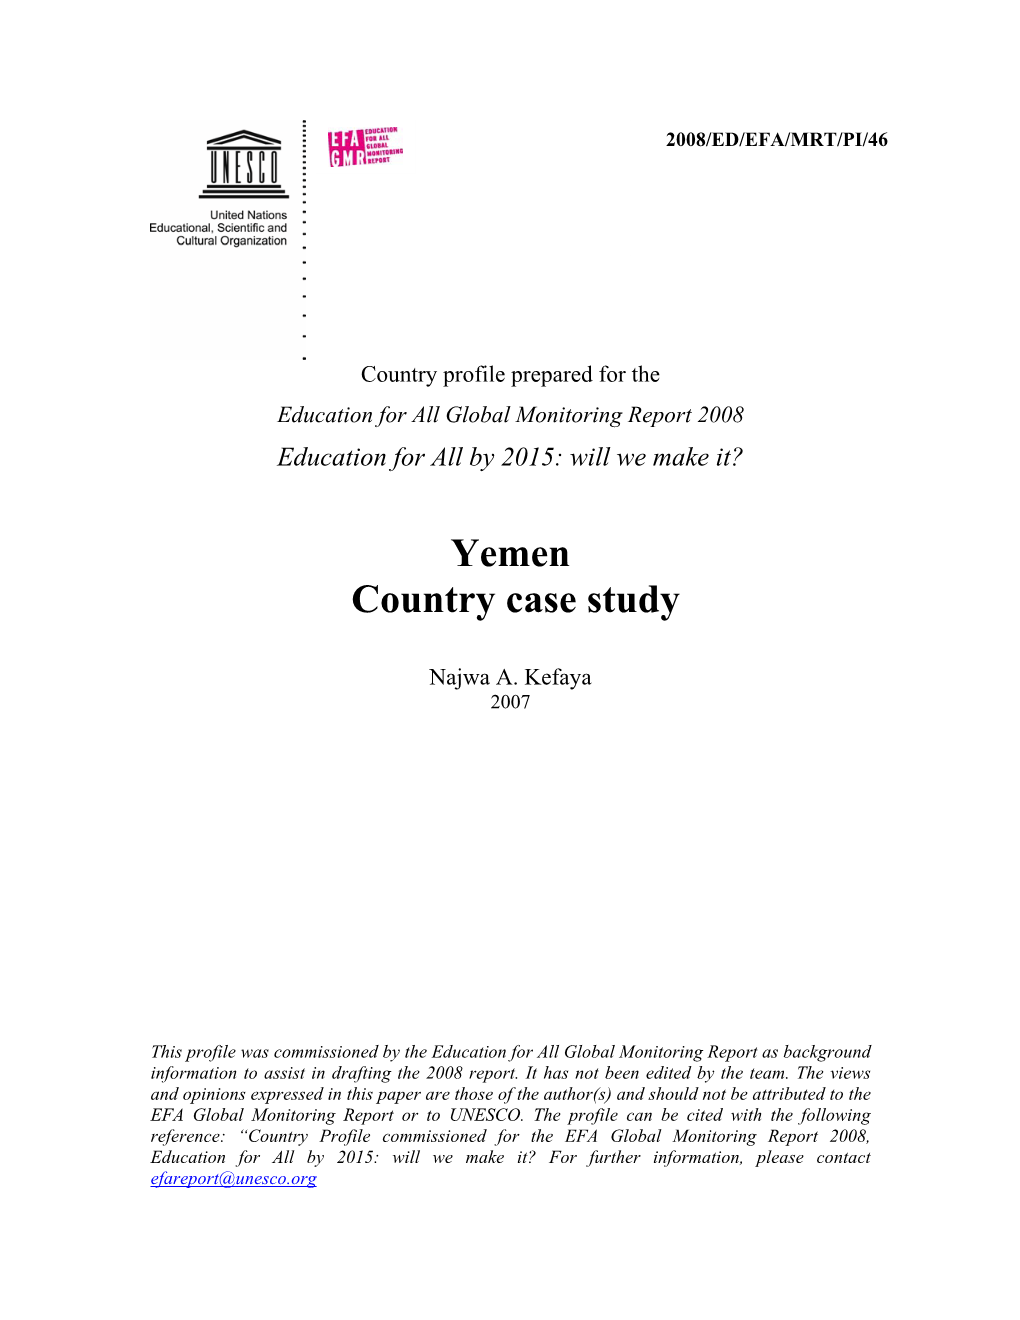 Yemen Country Case Study